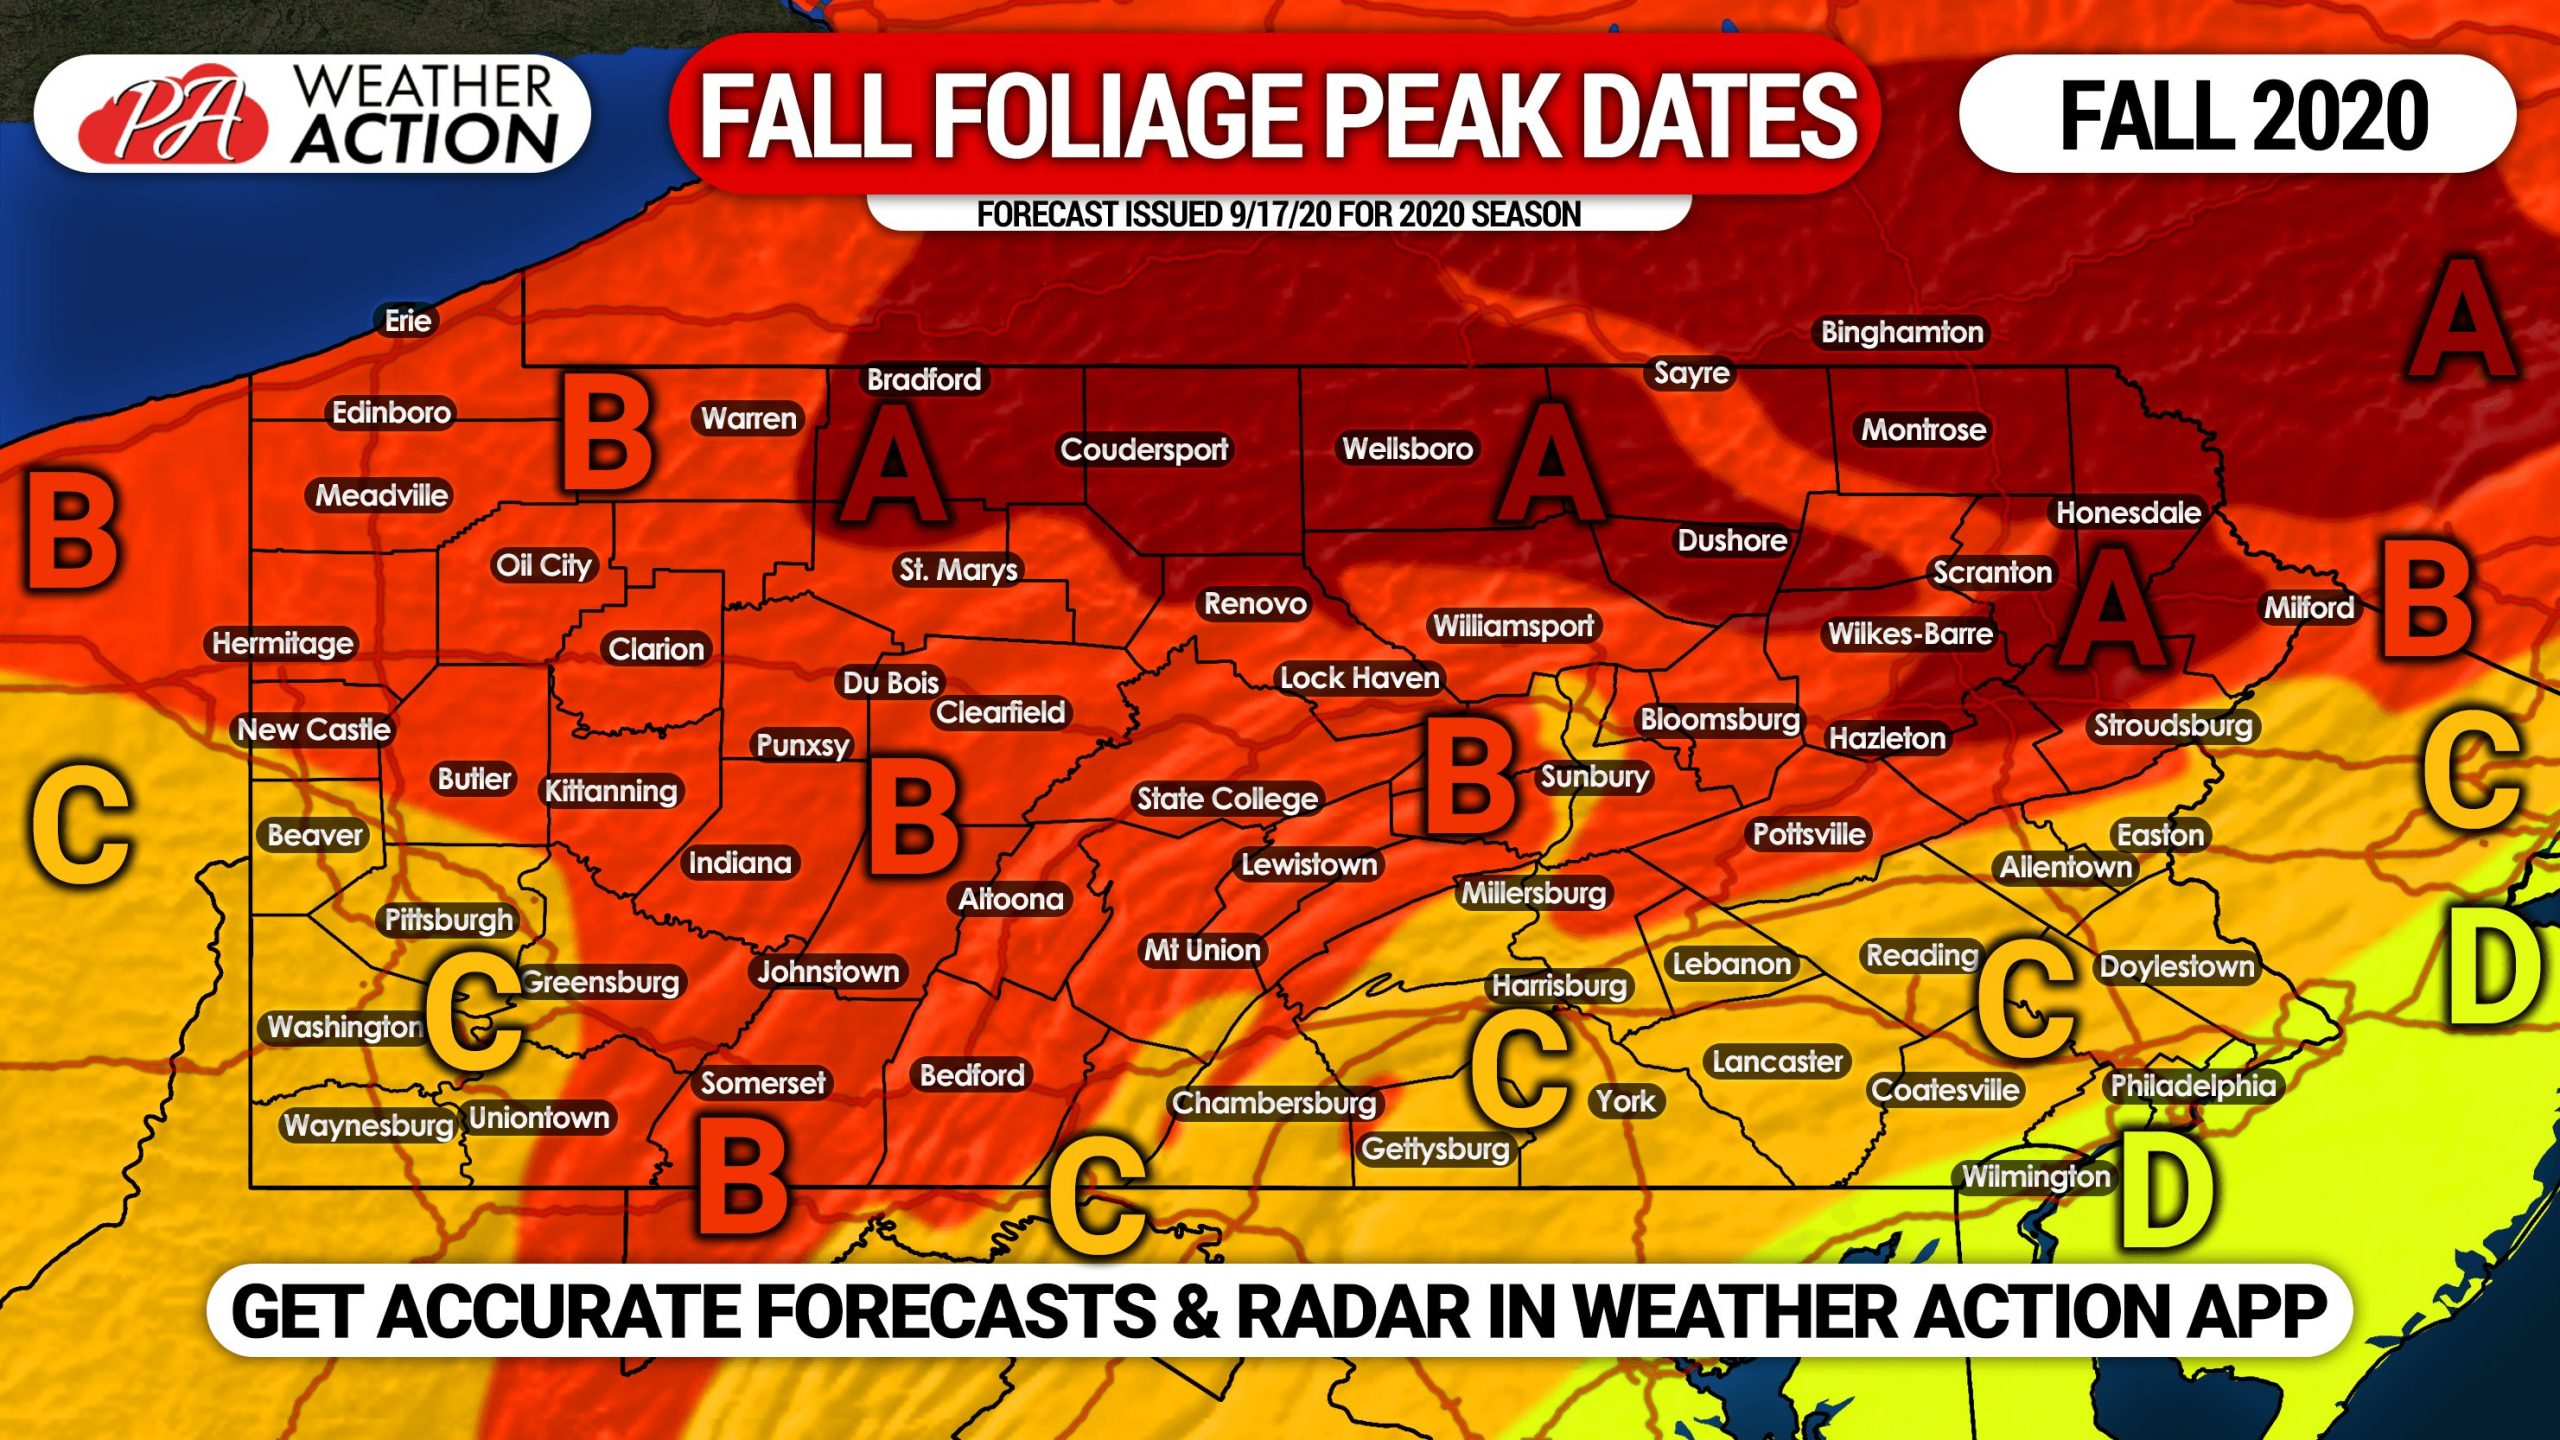 2020-fall-foliage-peak-dates-forecast-for-areas-across-pennsylvania